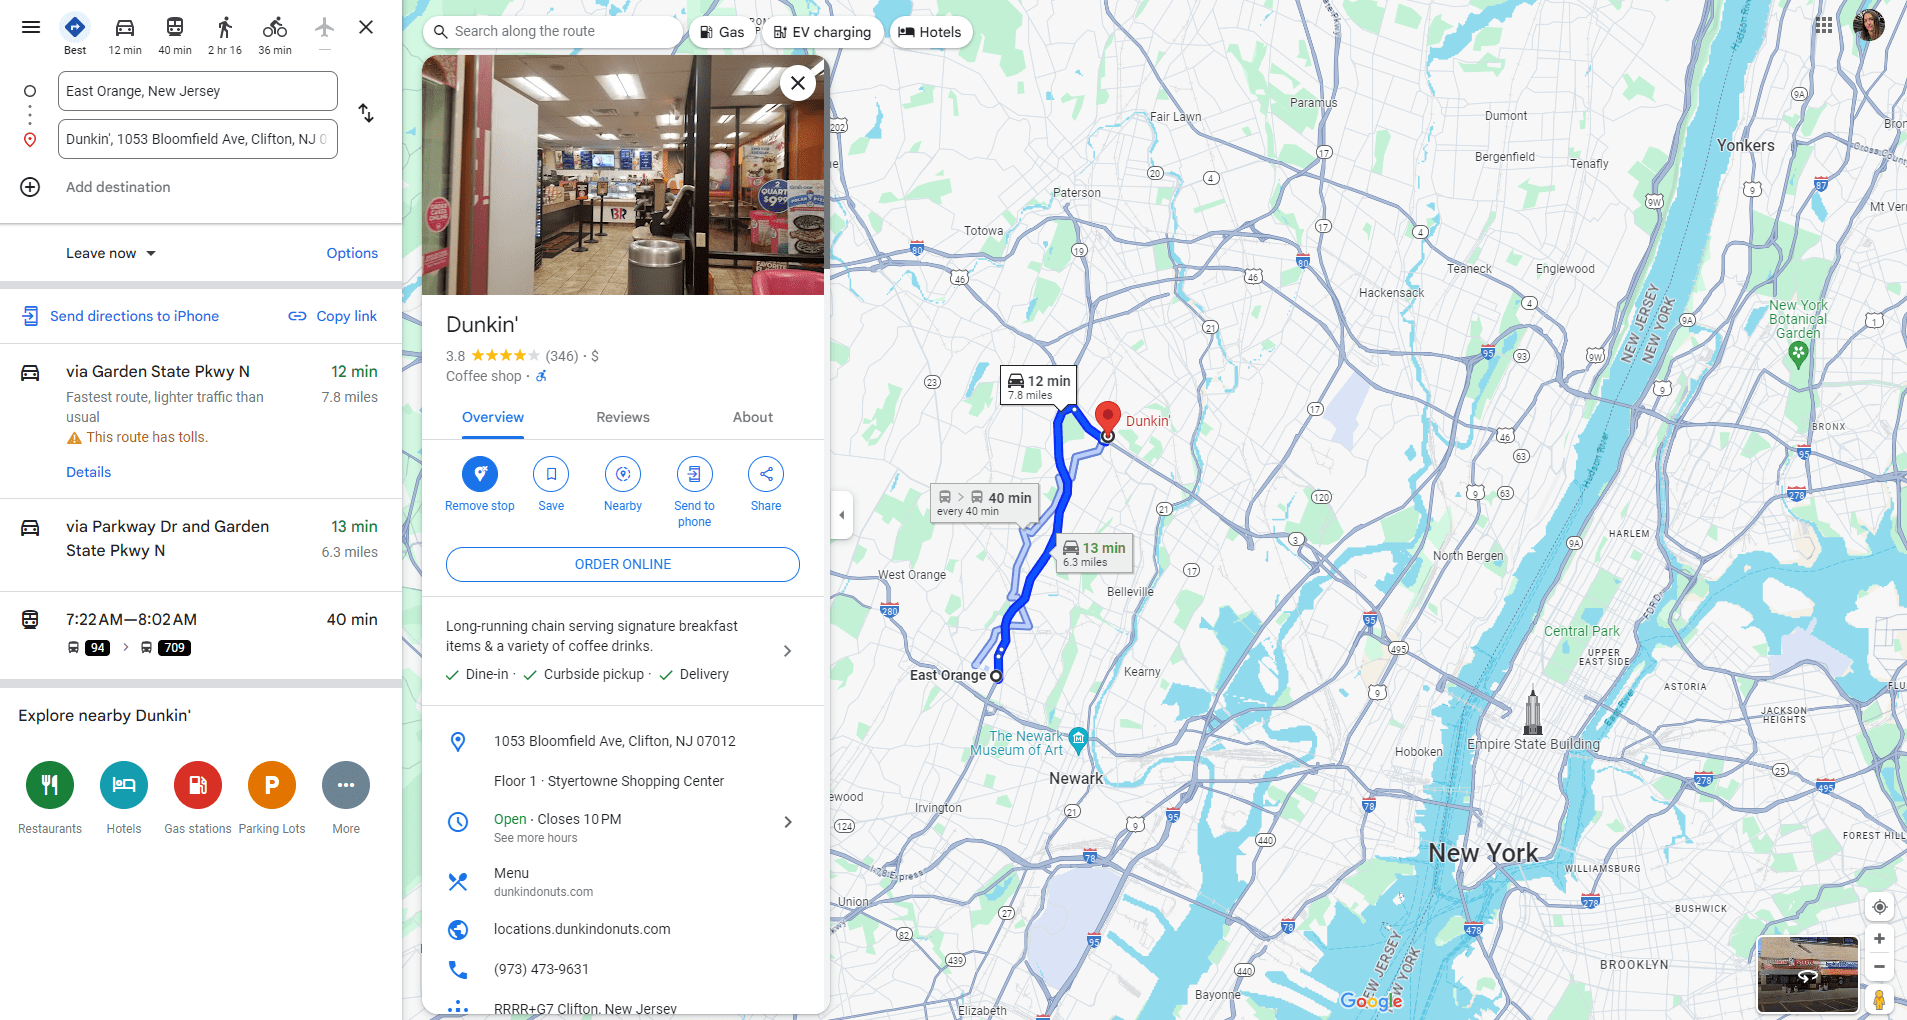 Dunkin on google maps